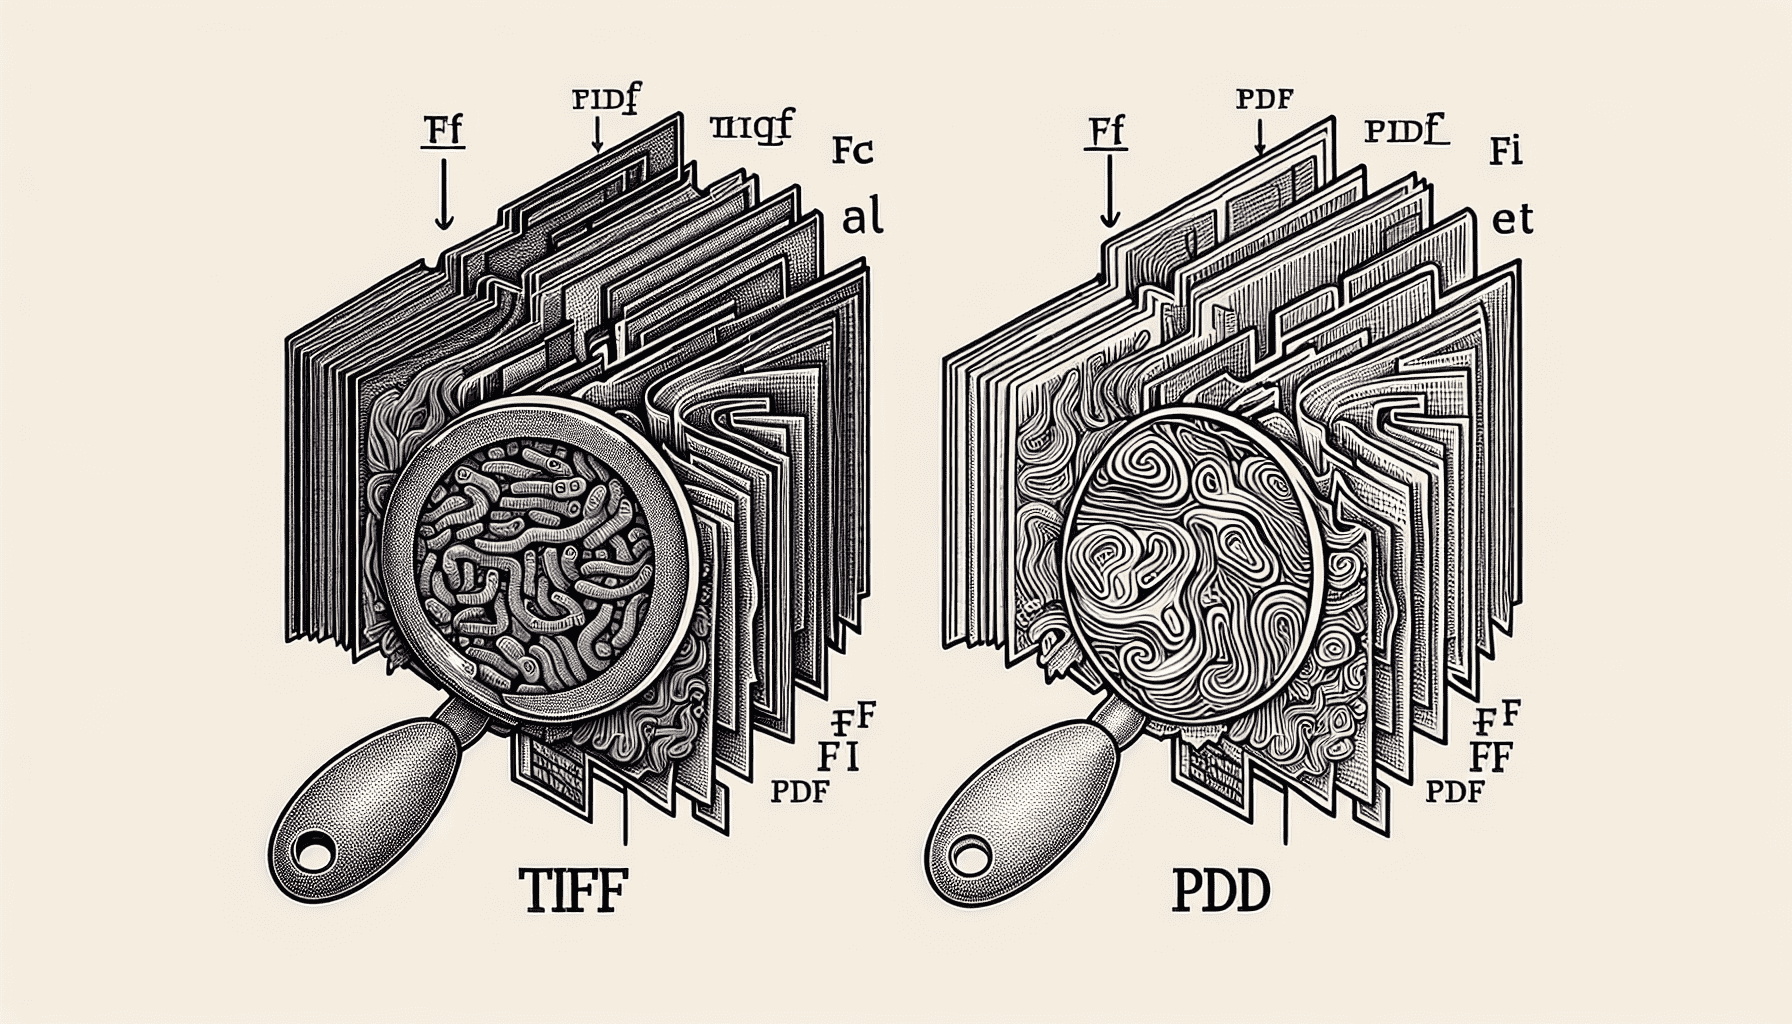 Illustration comparing TIFF and PDF file formats